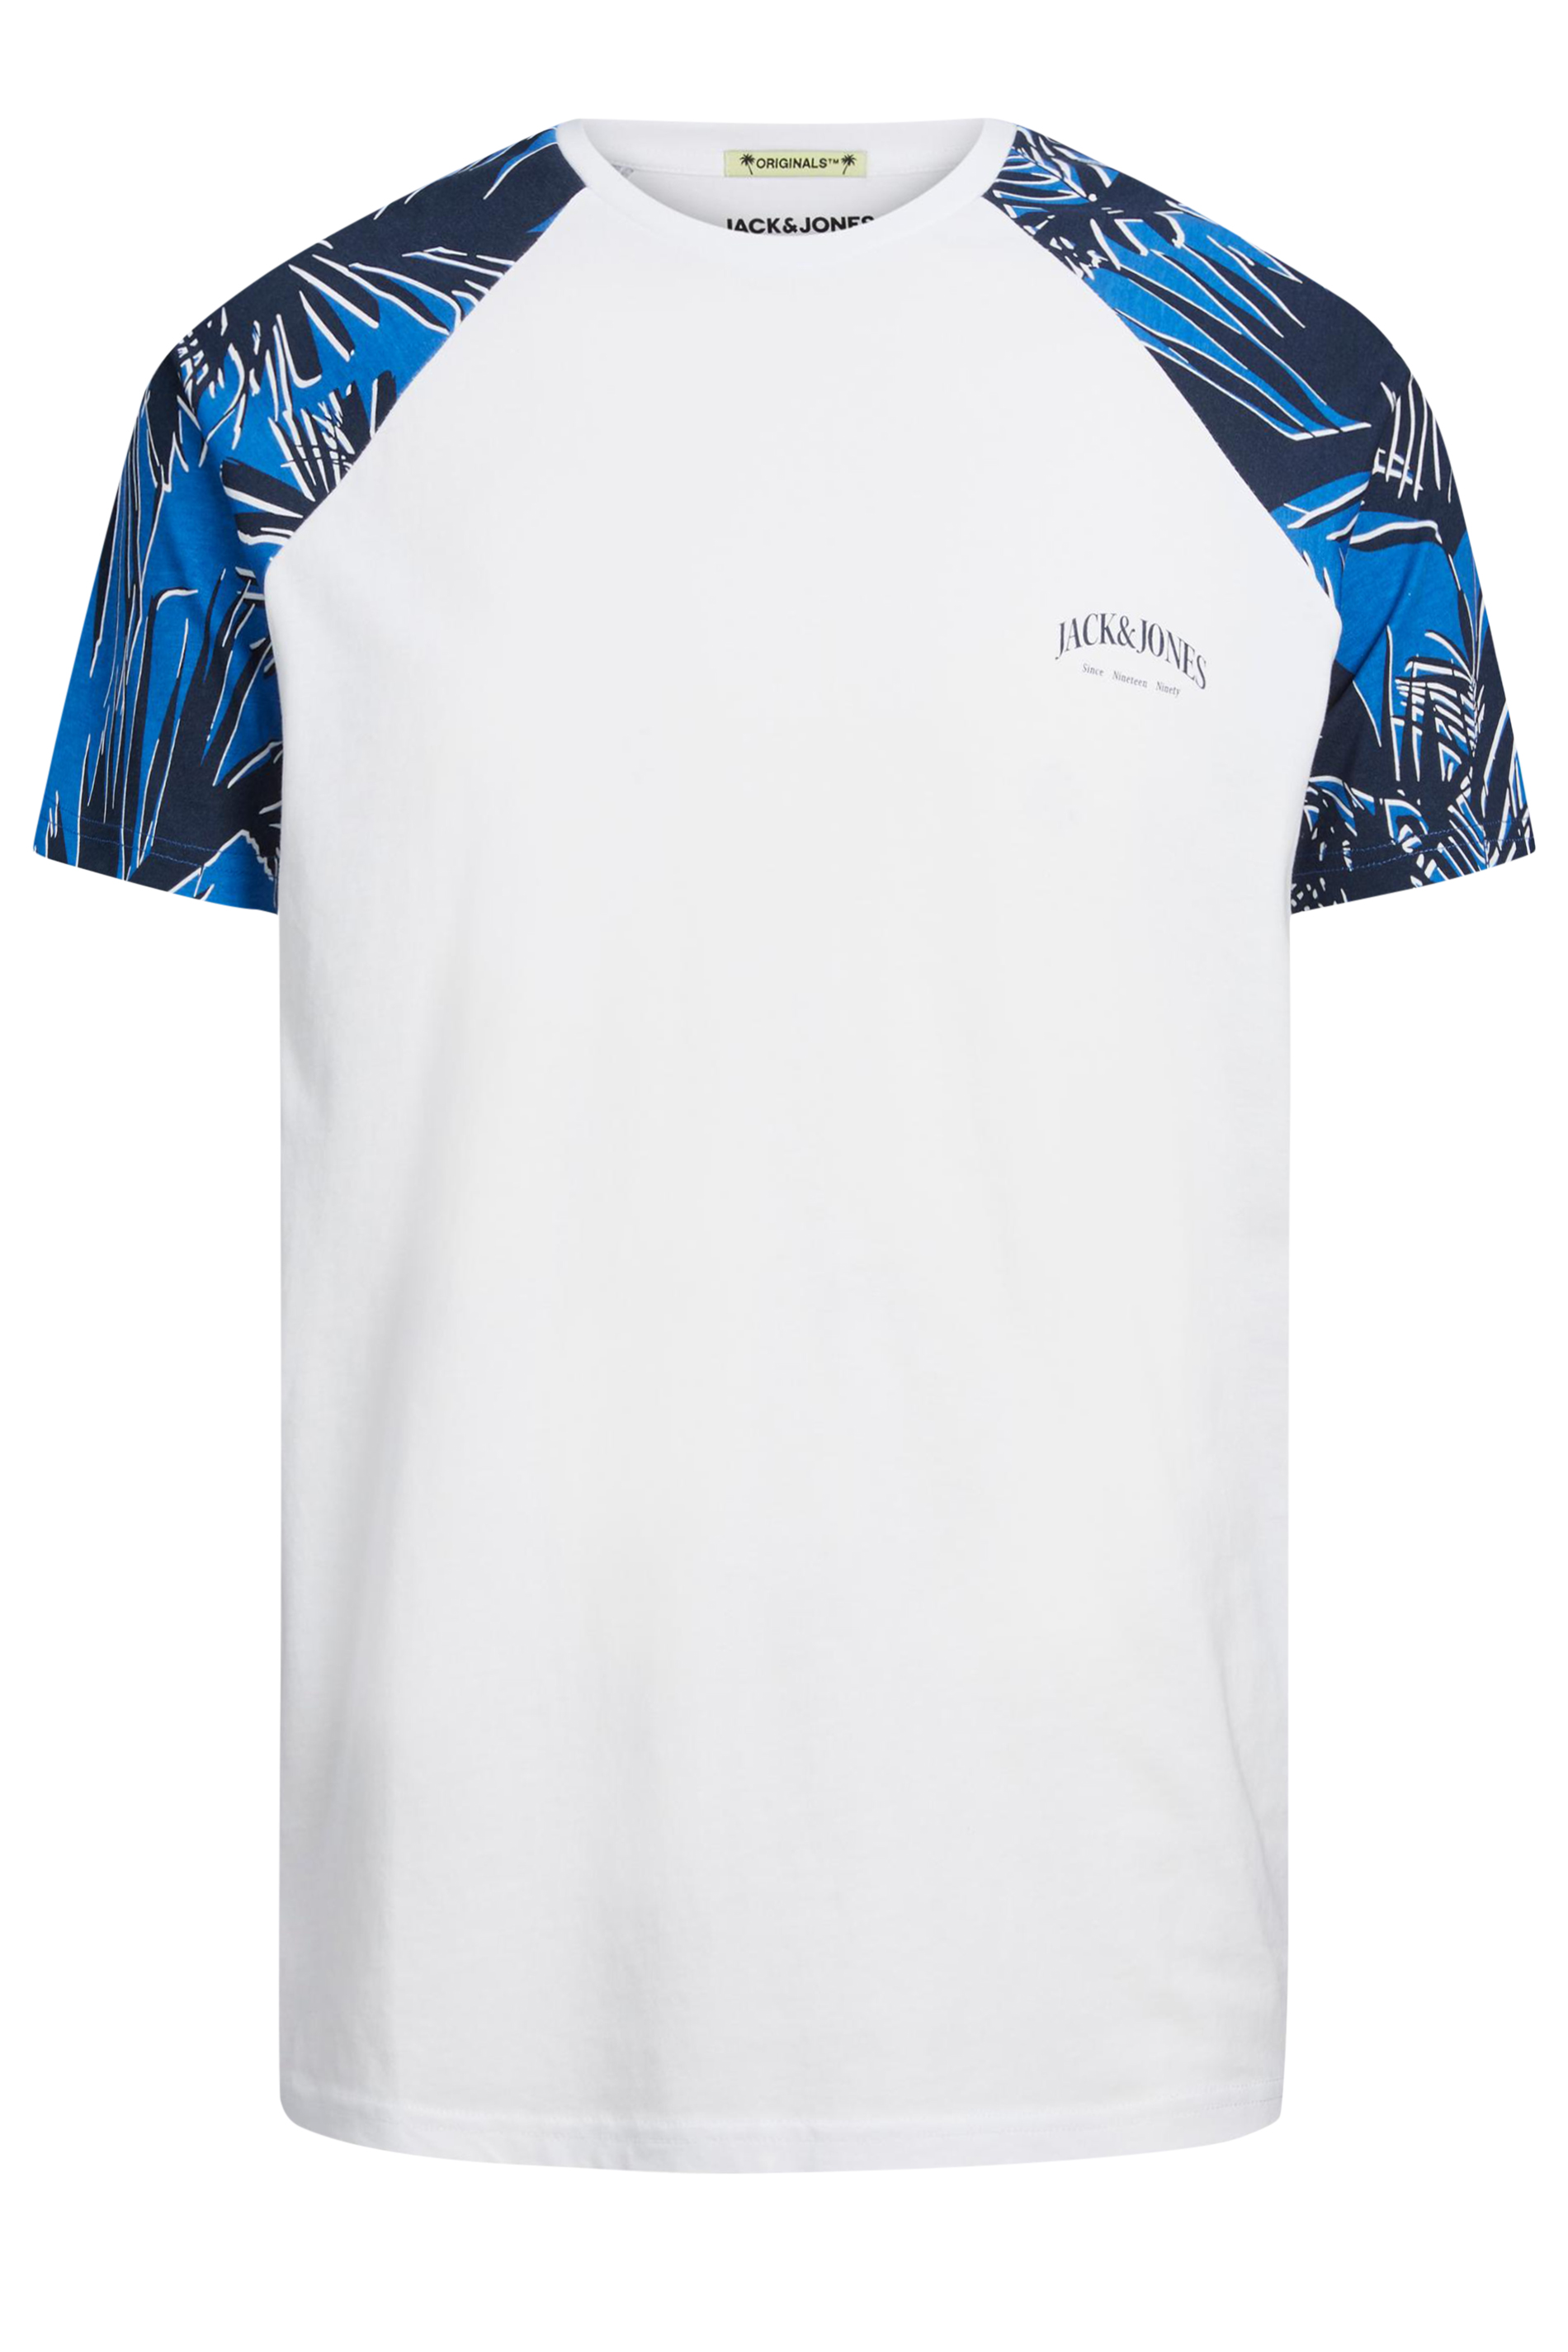 JACK & JONES Big & Tall White & Blue Contrast Sleeve T-Shirt | BadRhino 2